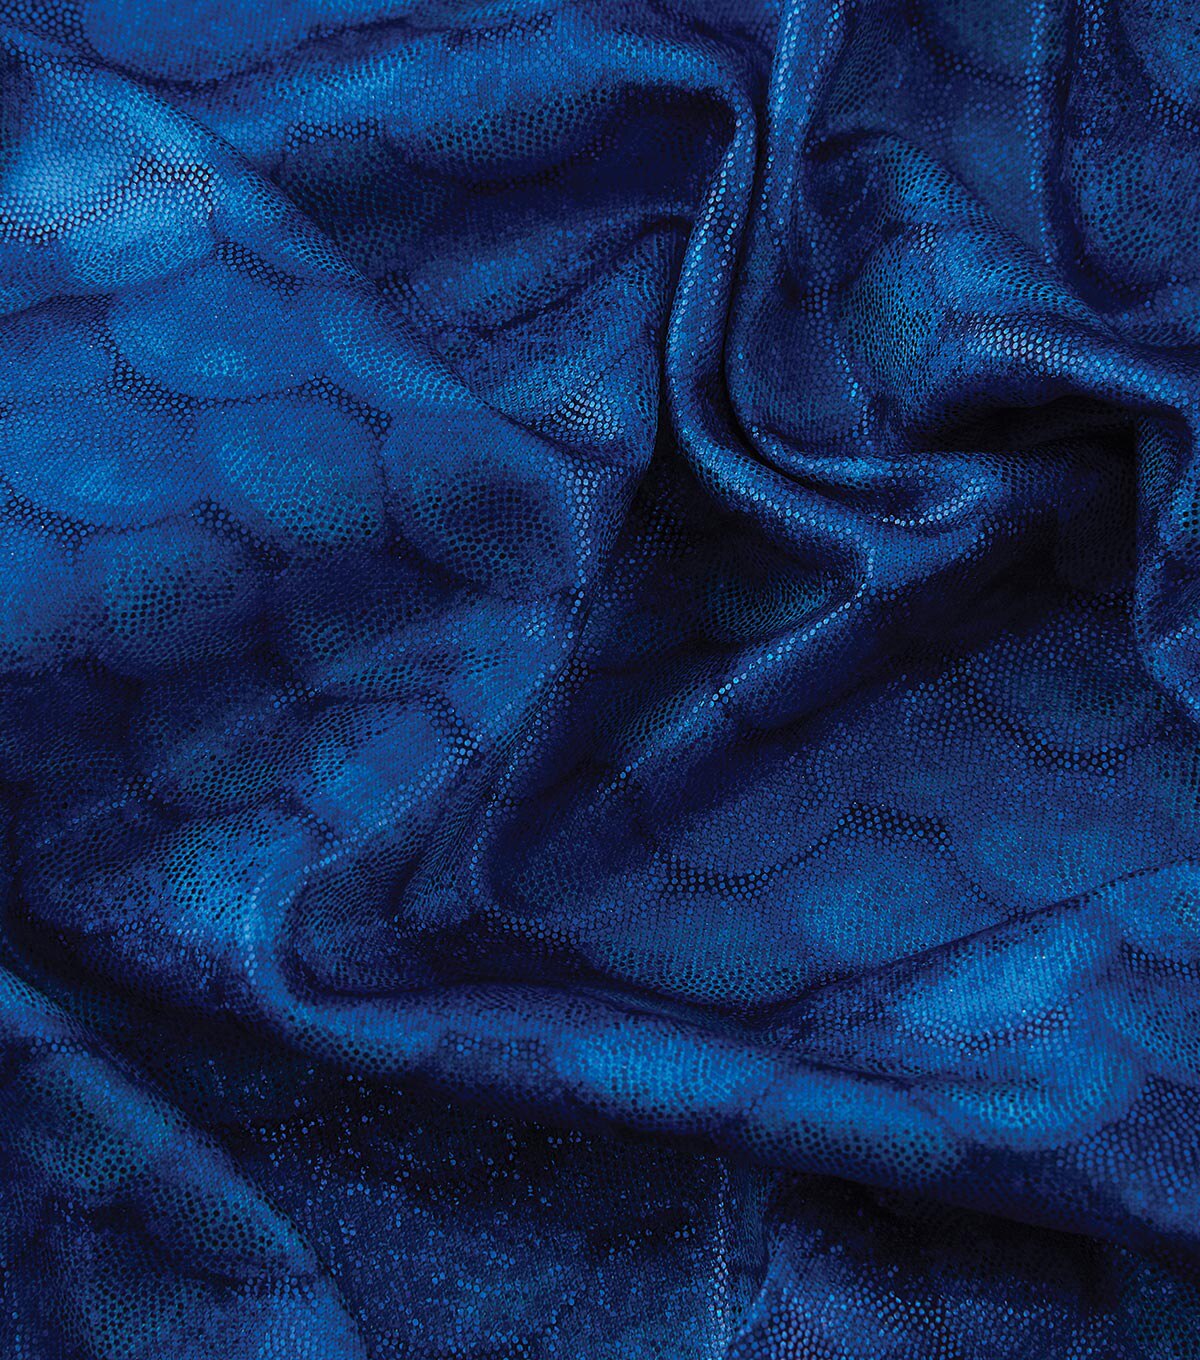 Yaya Han Mermaid Scales Holographic Blue | JOANN